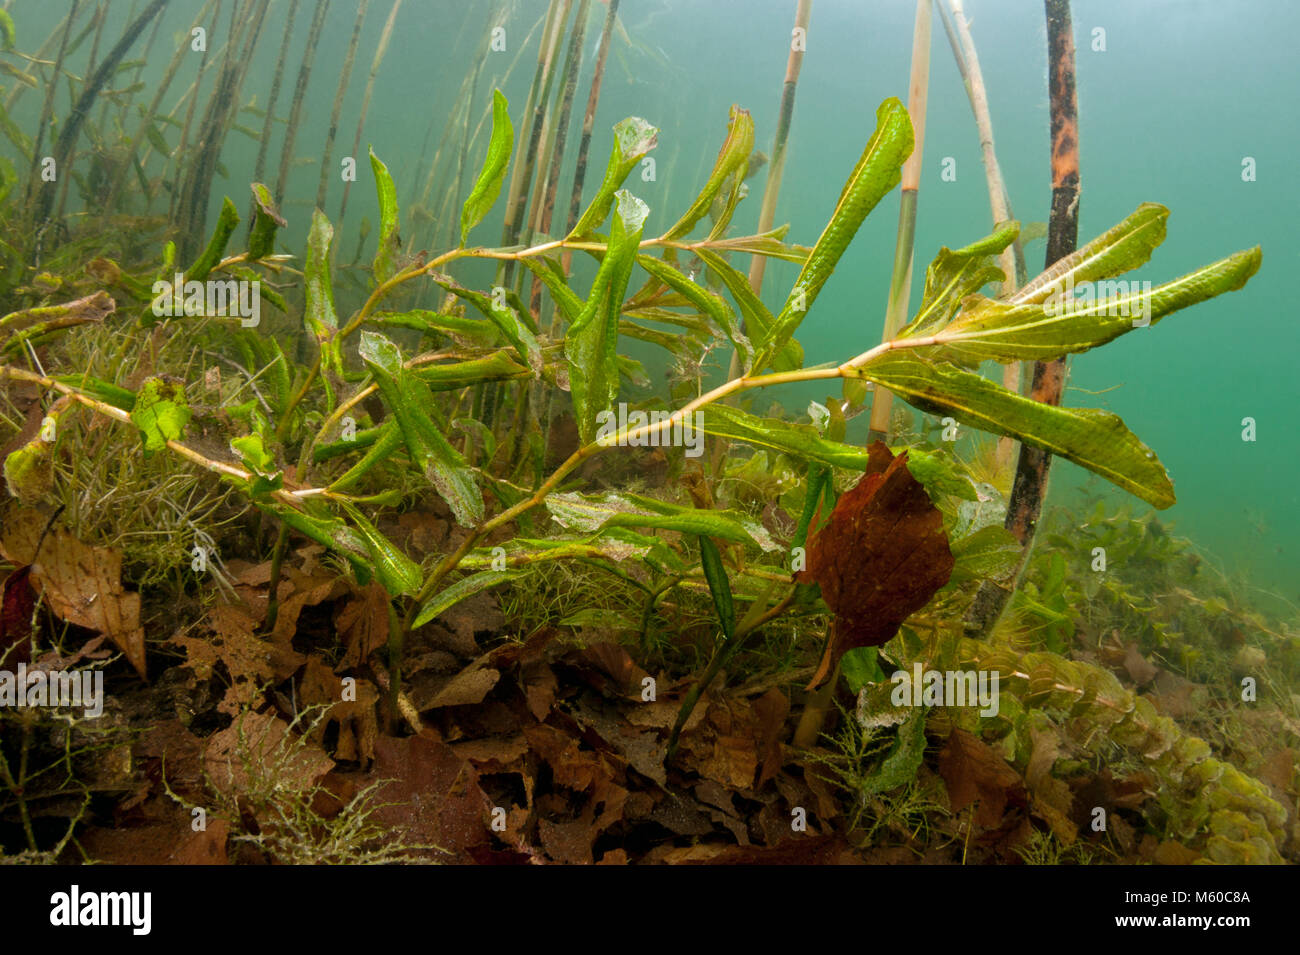 Shining Pondweed (Potamogeton lucens) under water. Germany Stock Photo